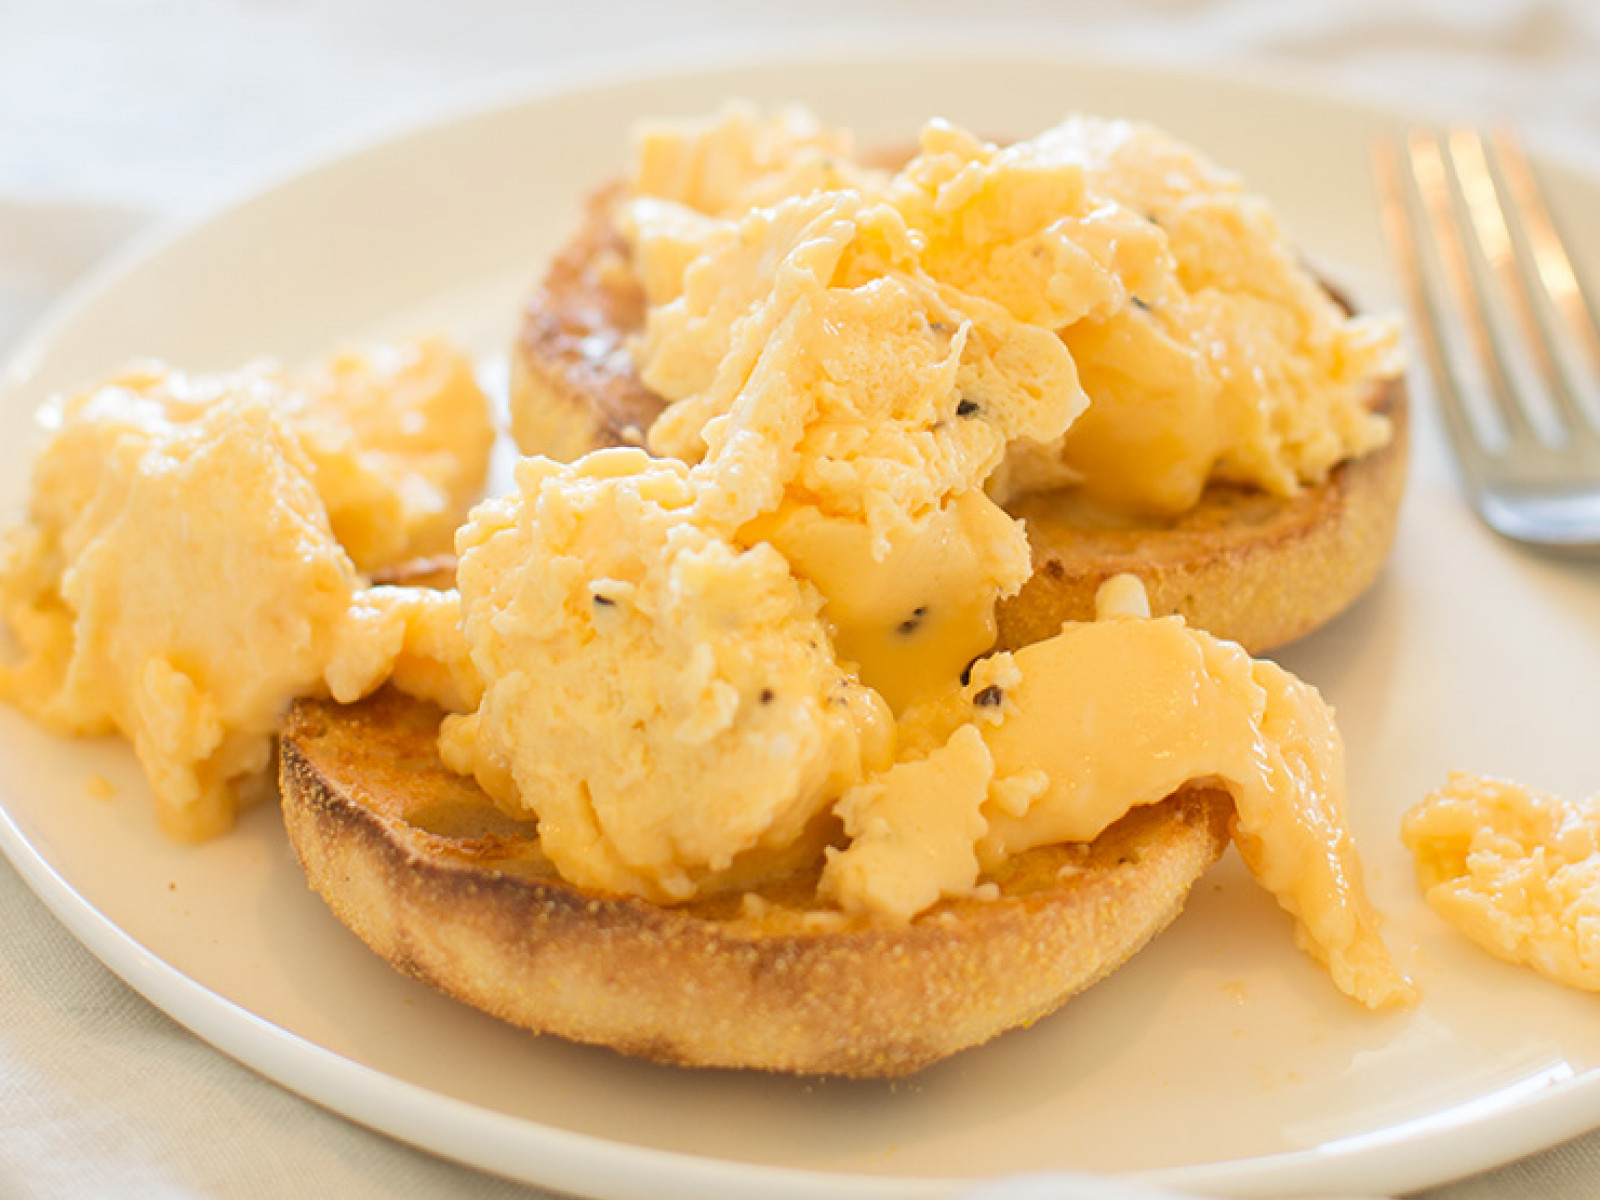  Microwave Scrambled Egg & Omelette Cooker, Fast